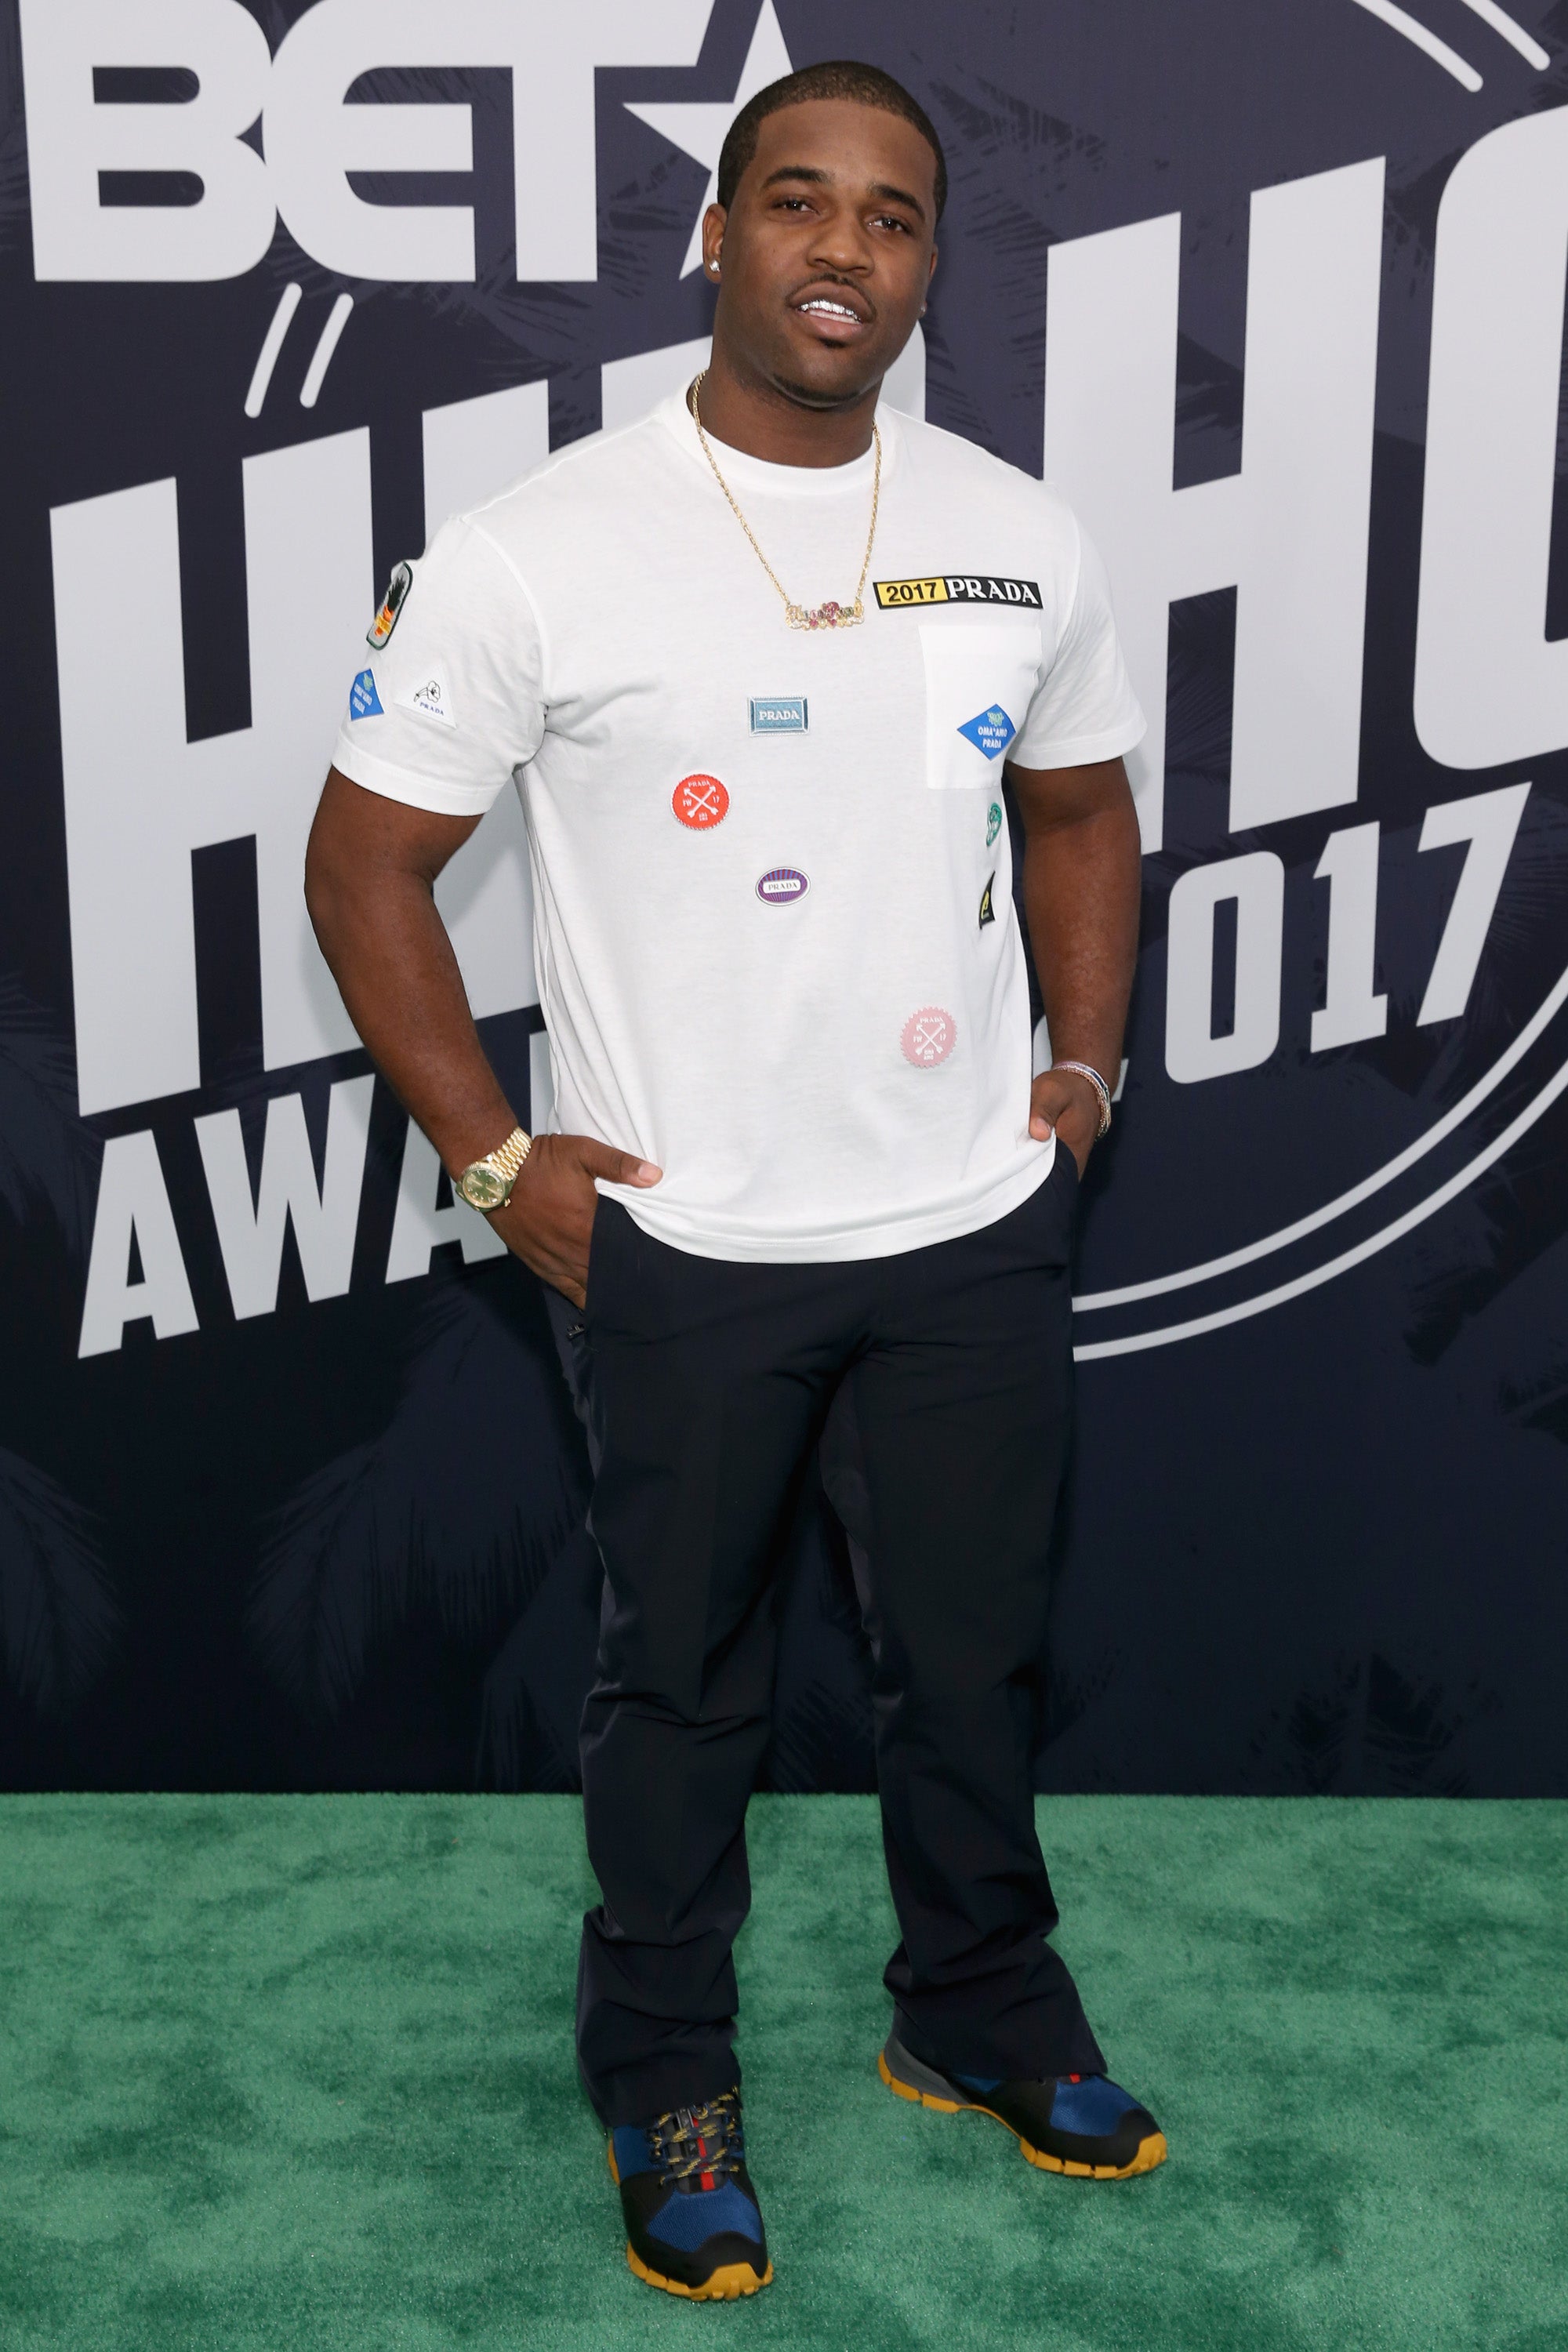 Stars Shine at the 2017 BET Hip Hop Awards
